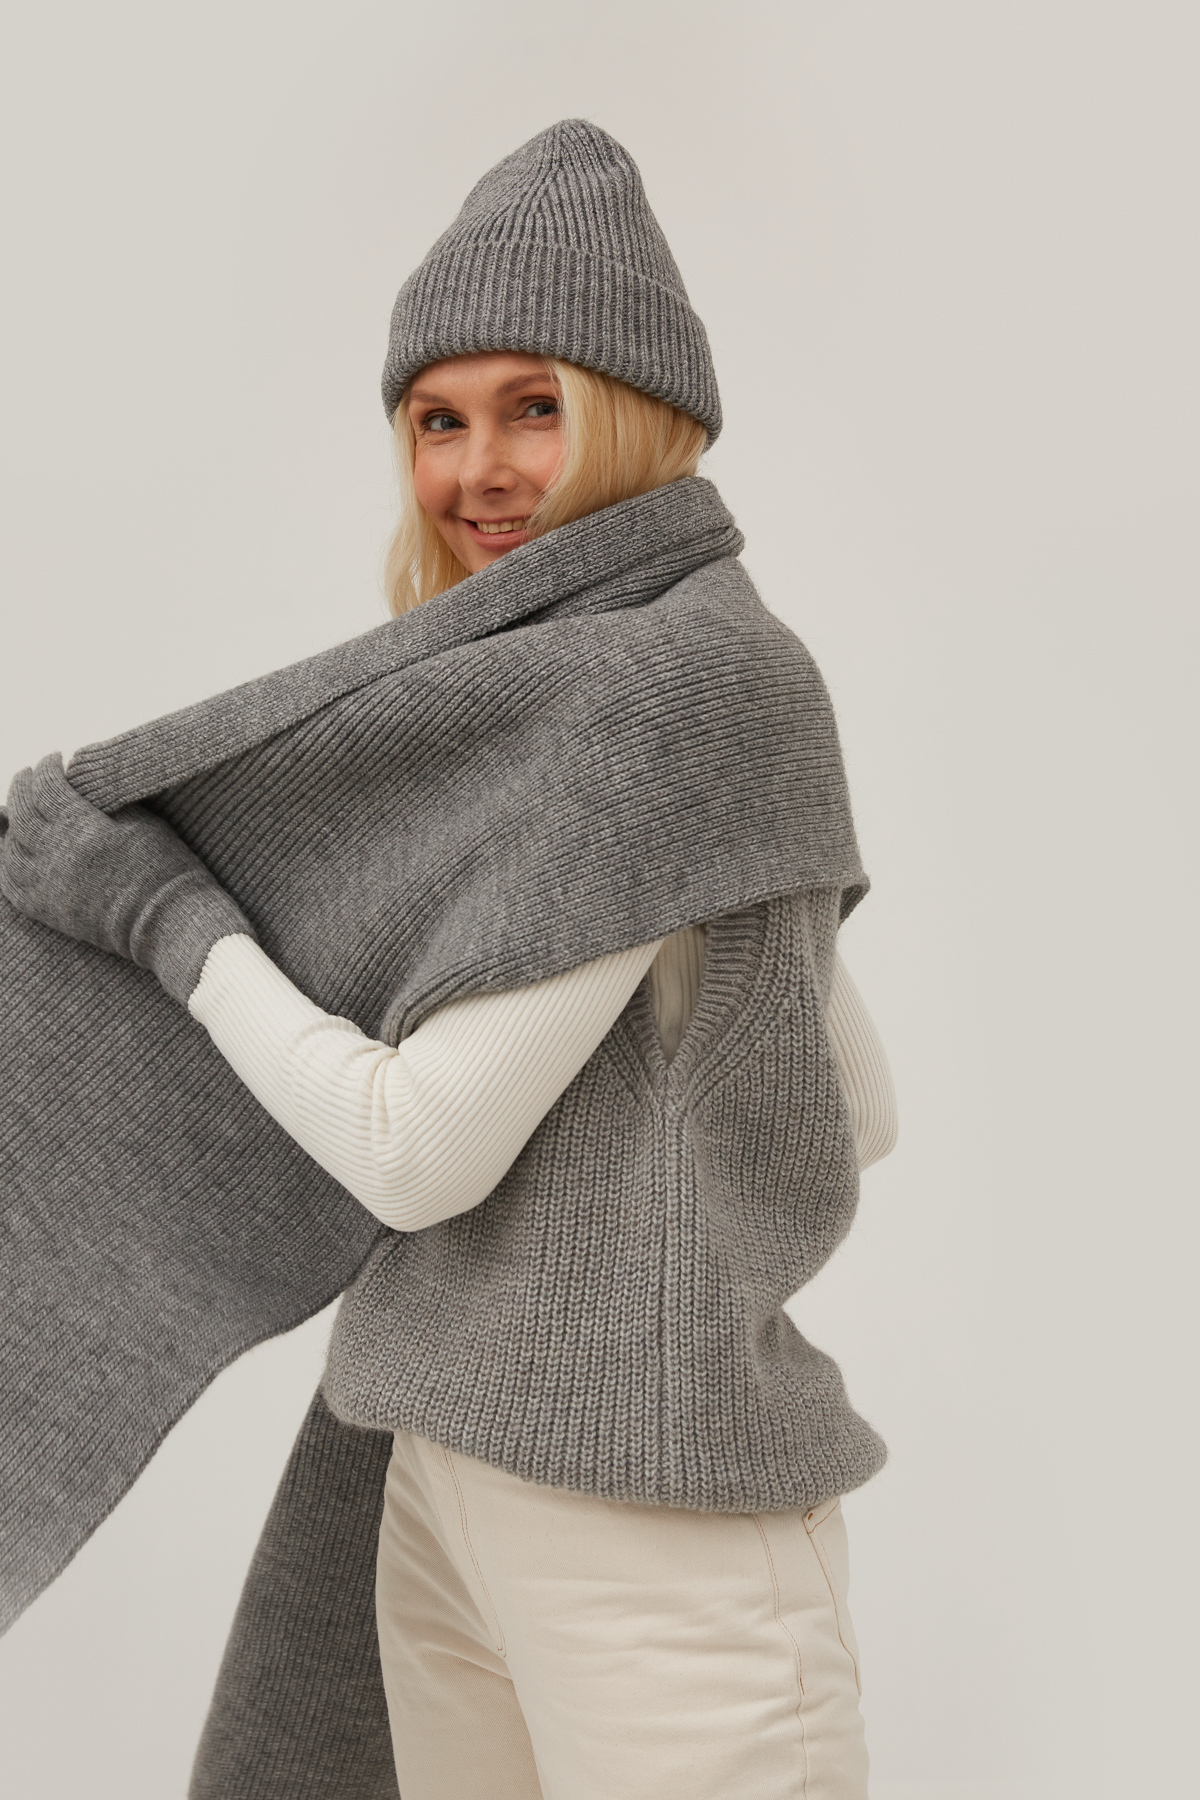 Knitted woolen grey scarf, photo 3